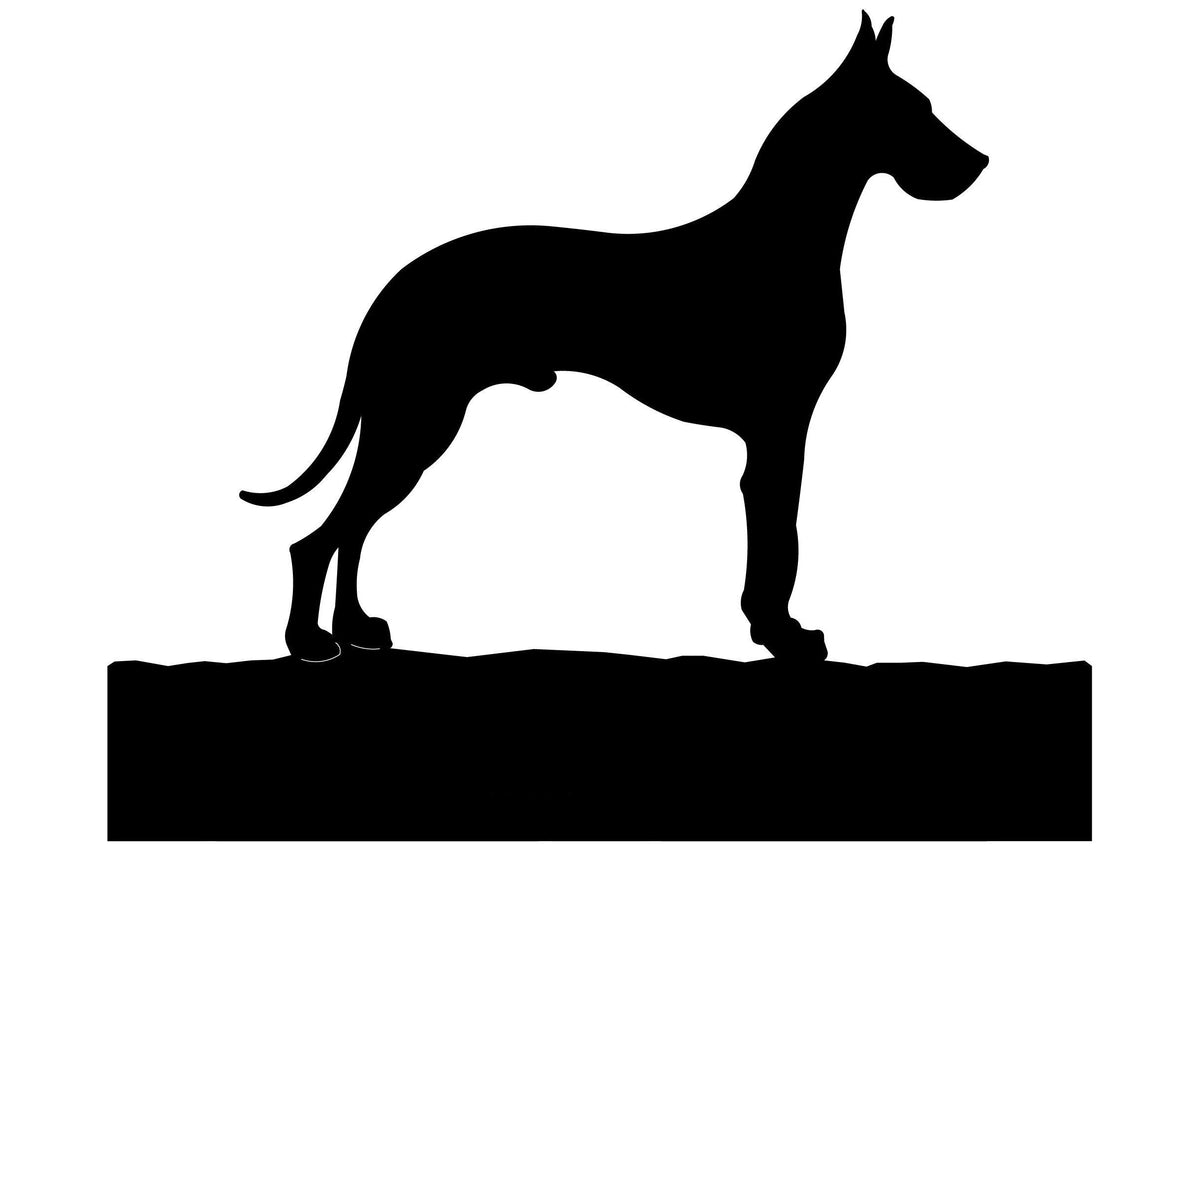 Great Dane dog address stake